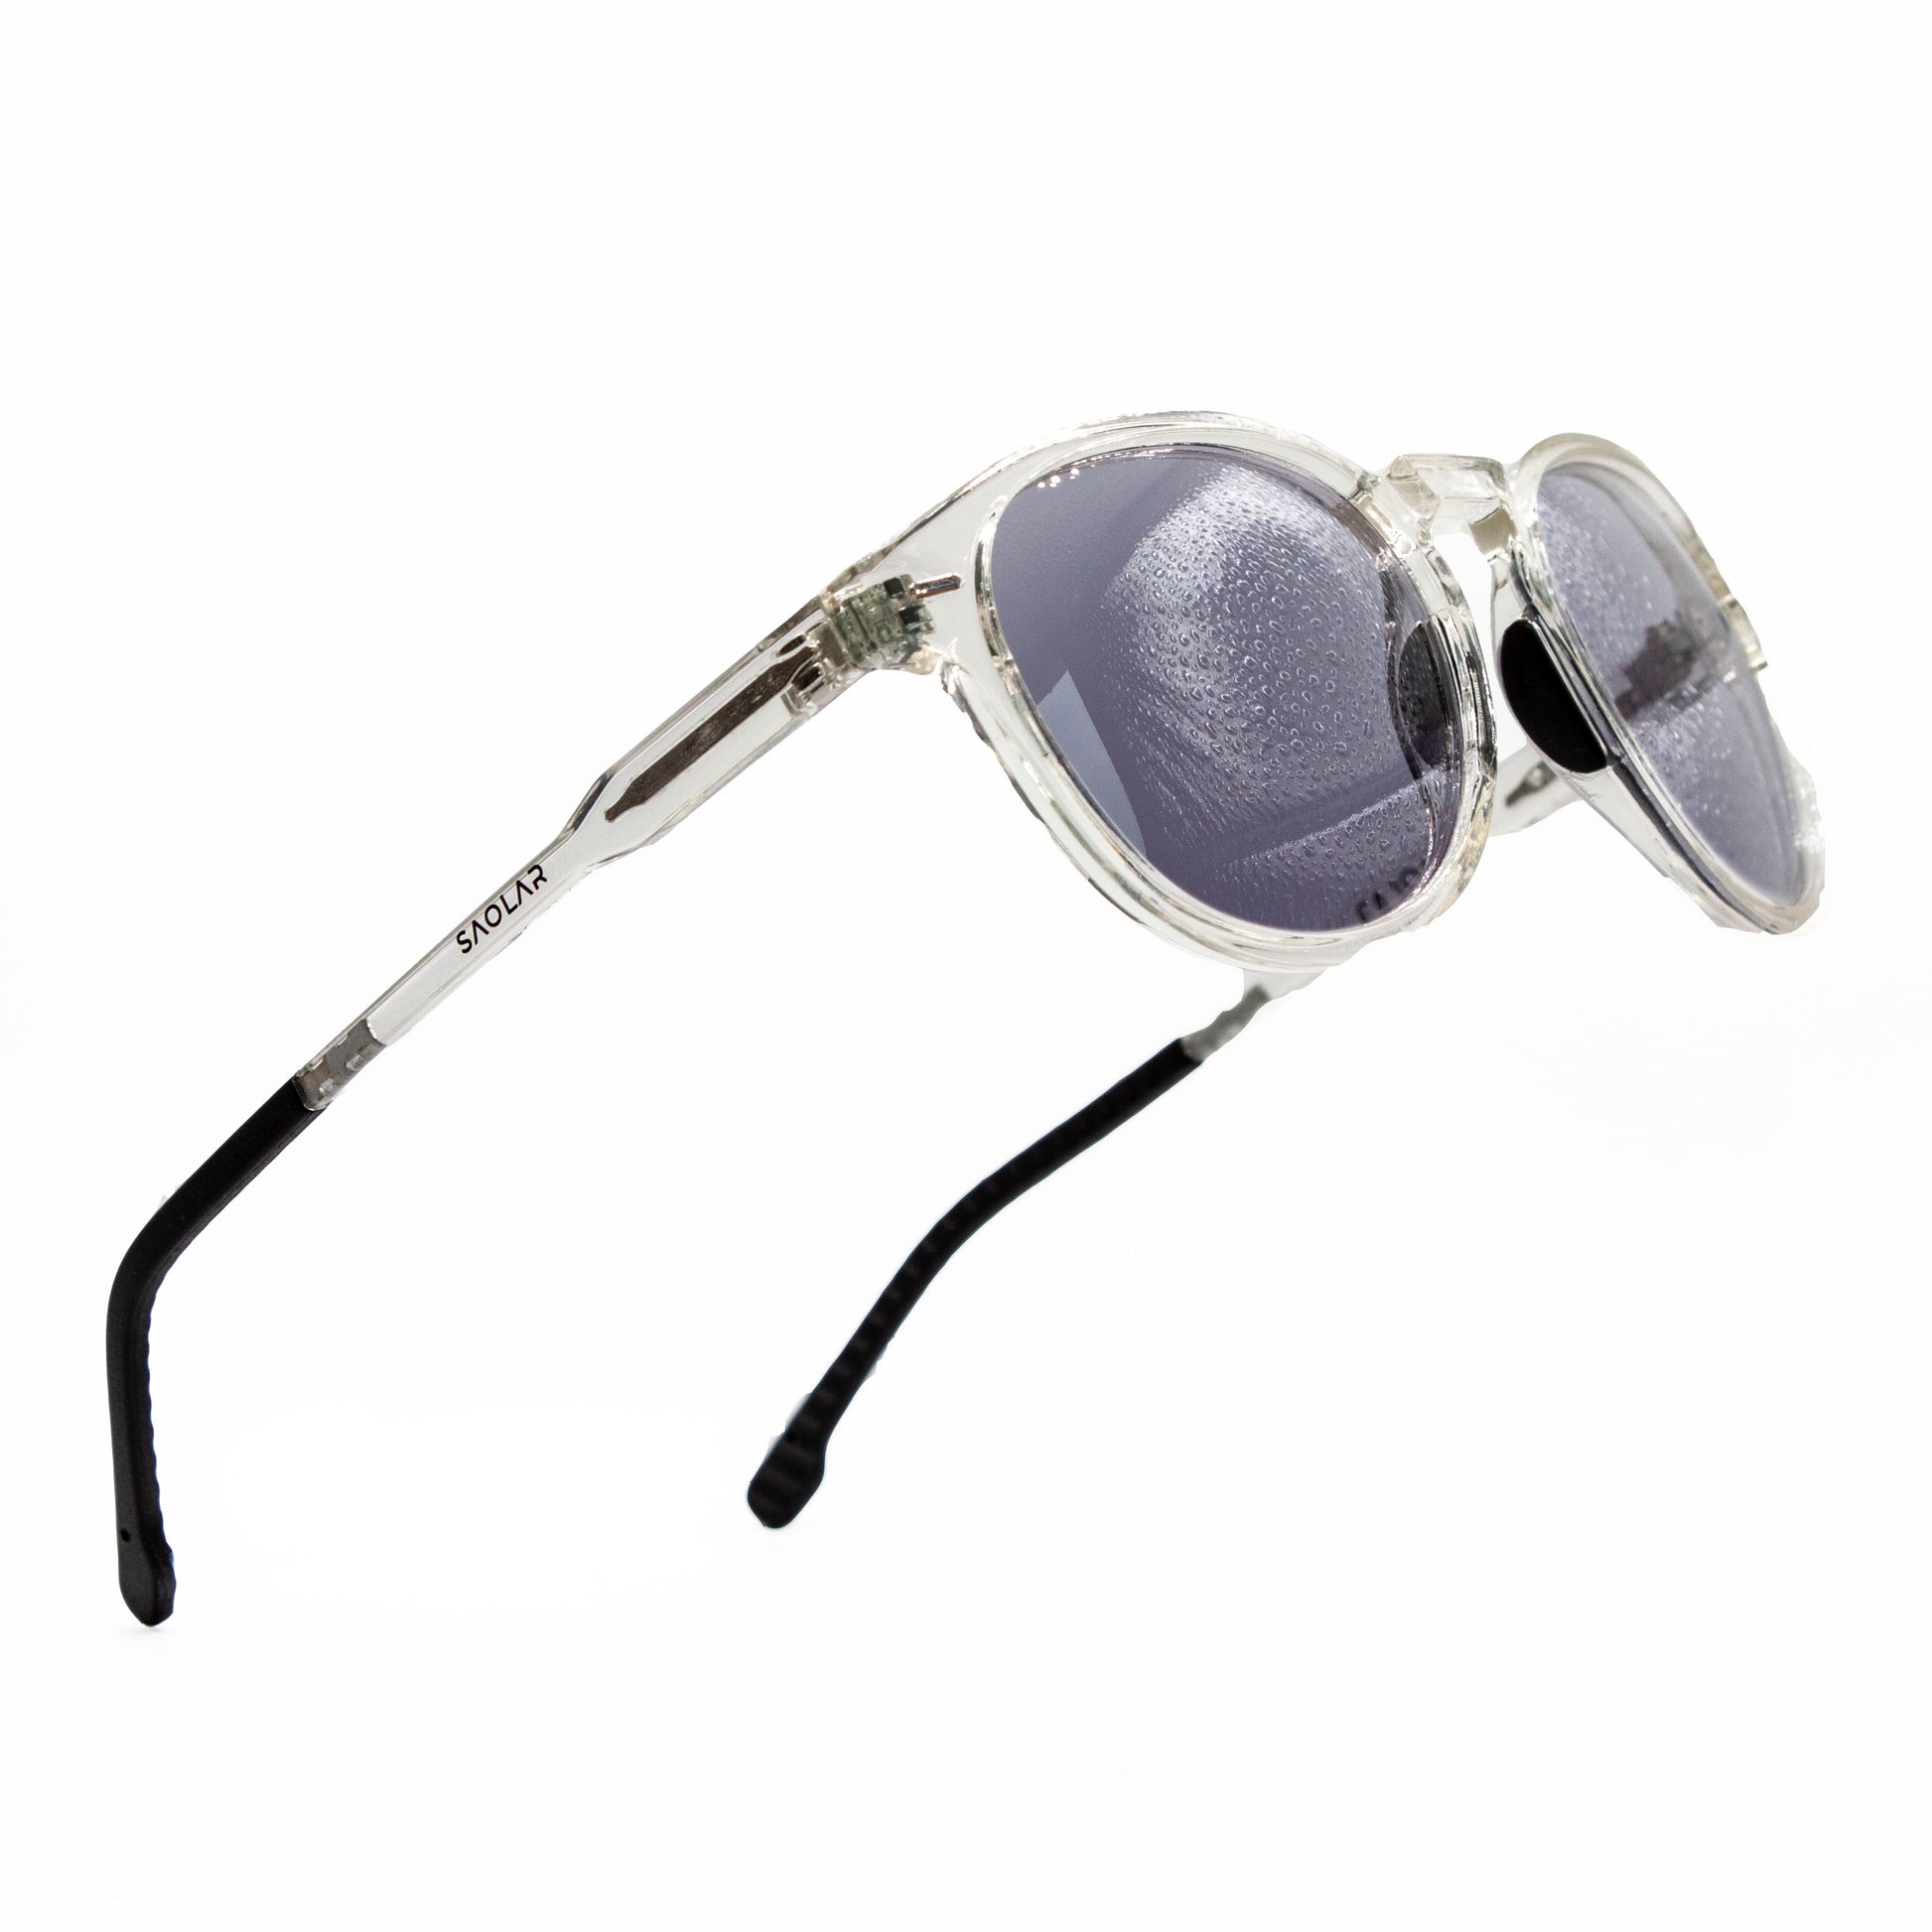 Snowshades photochromic sunglasses - side view